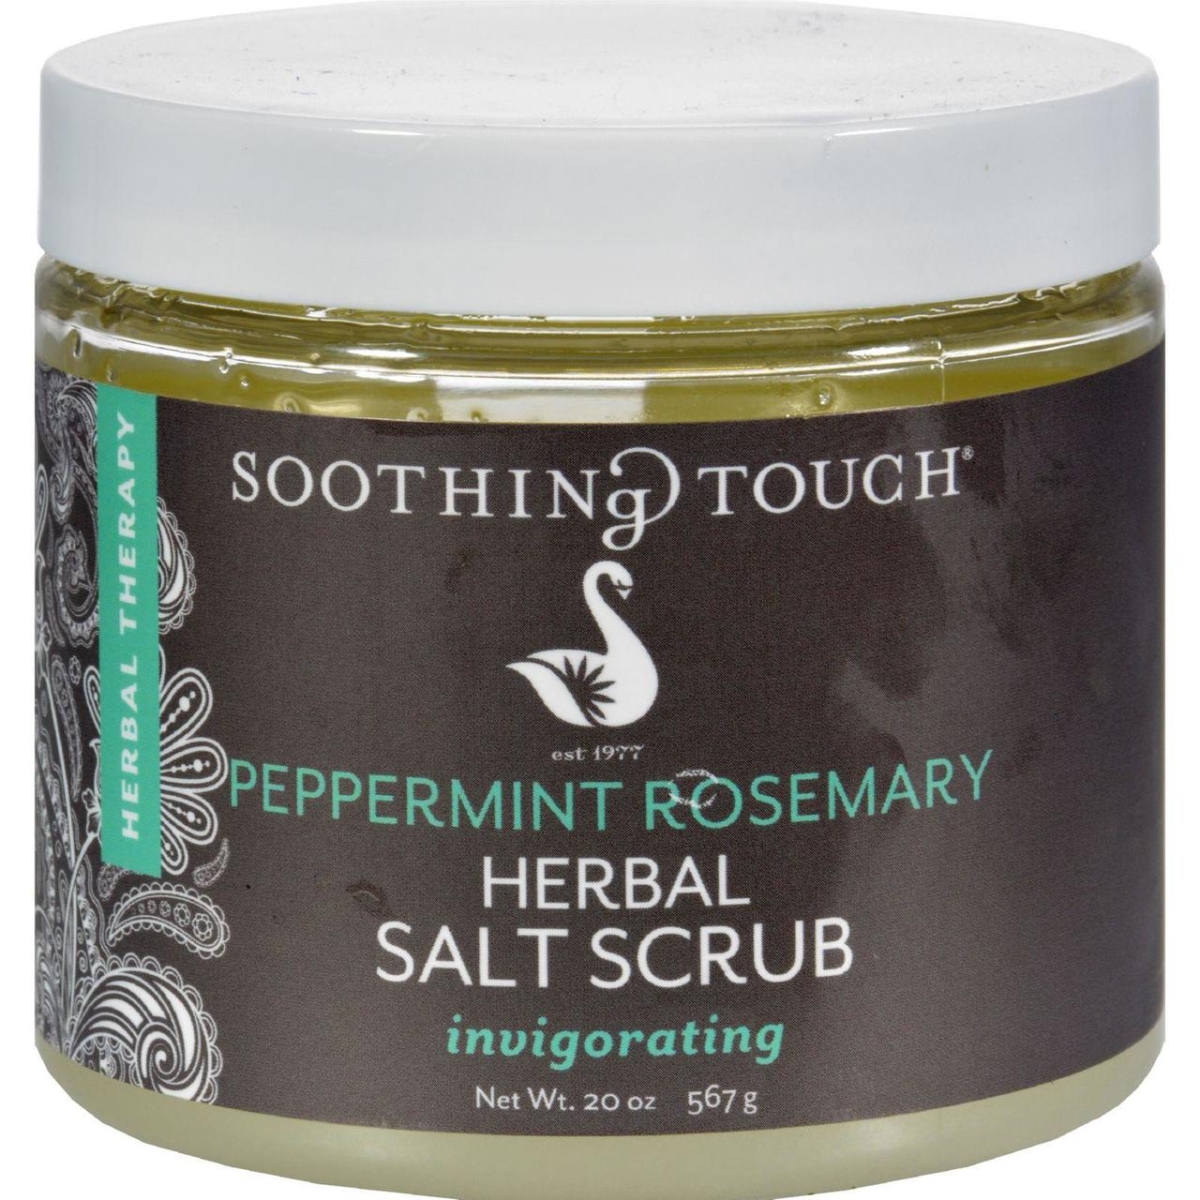 Hg0516328 20 Oz Salt Scrub - Peppermint & Rosemary